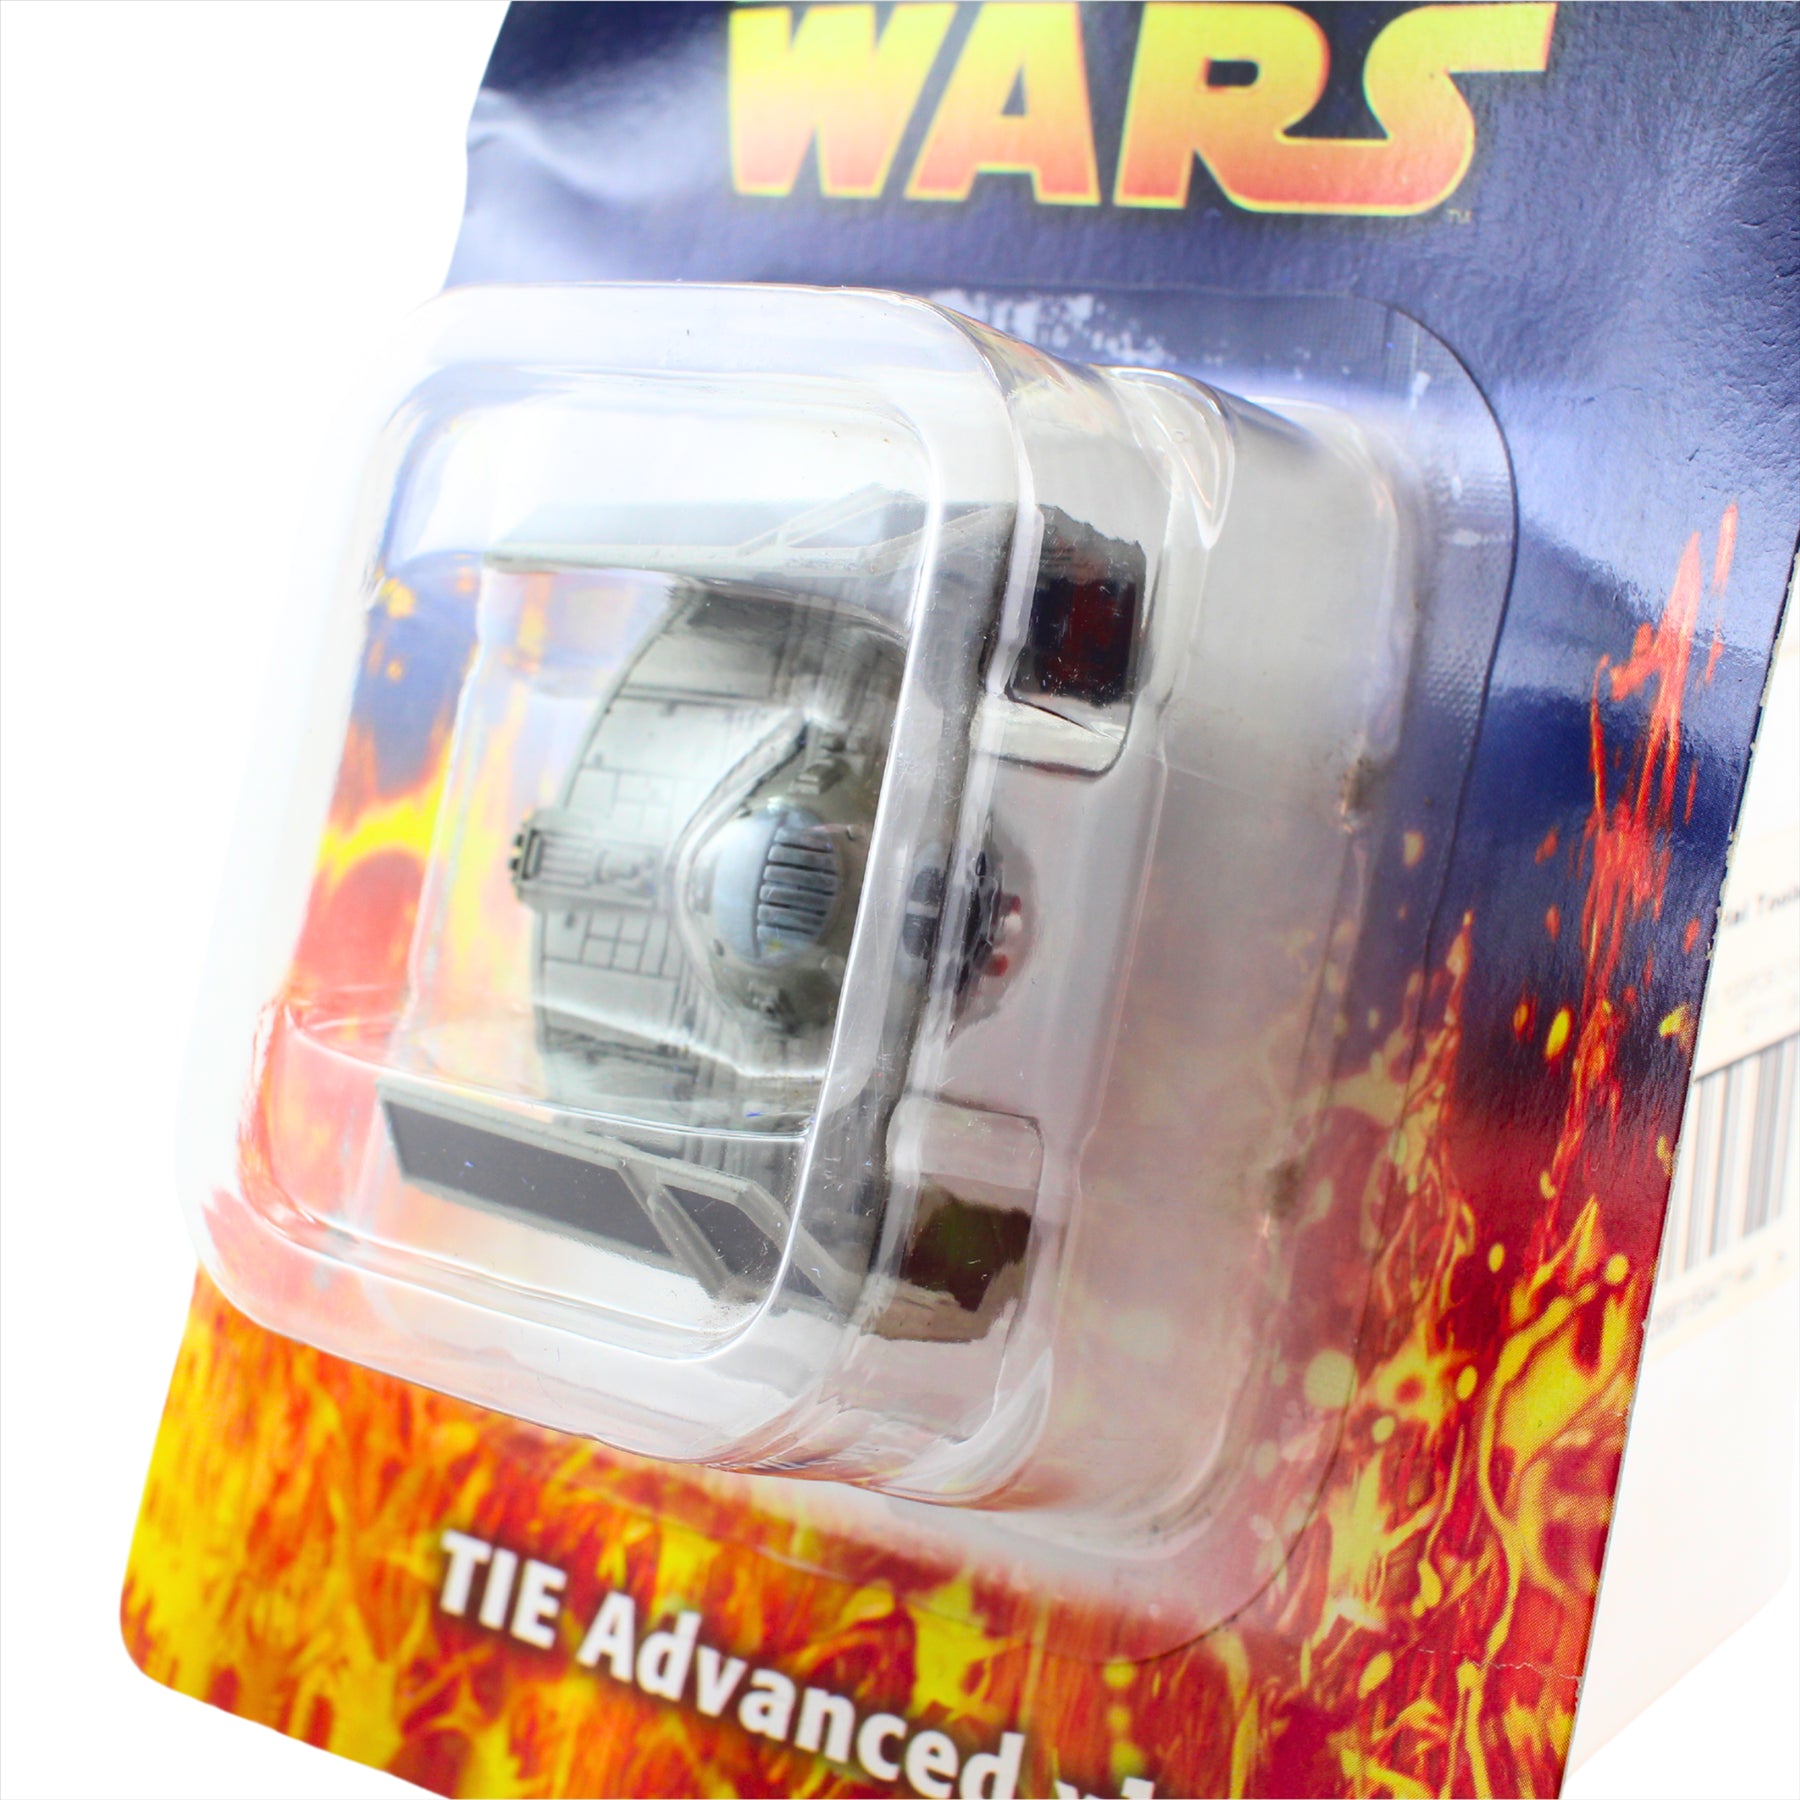 Star Wars Anakin Skywalker, Chewbacca, and TIE Advanced x1 DeAgostini Vintage 6-8cm Diecast Figures - Pack of 3 - Toptoys2u